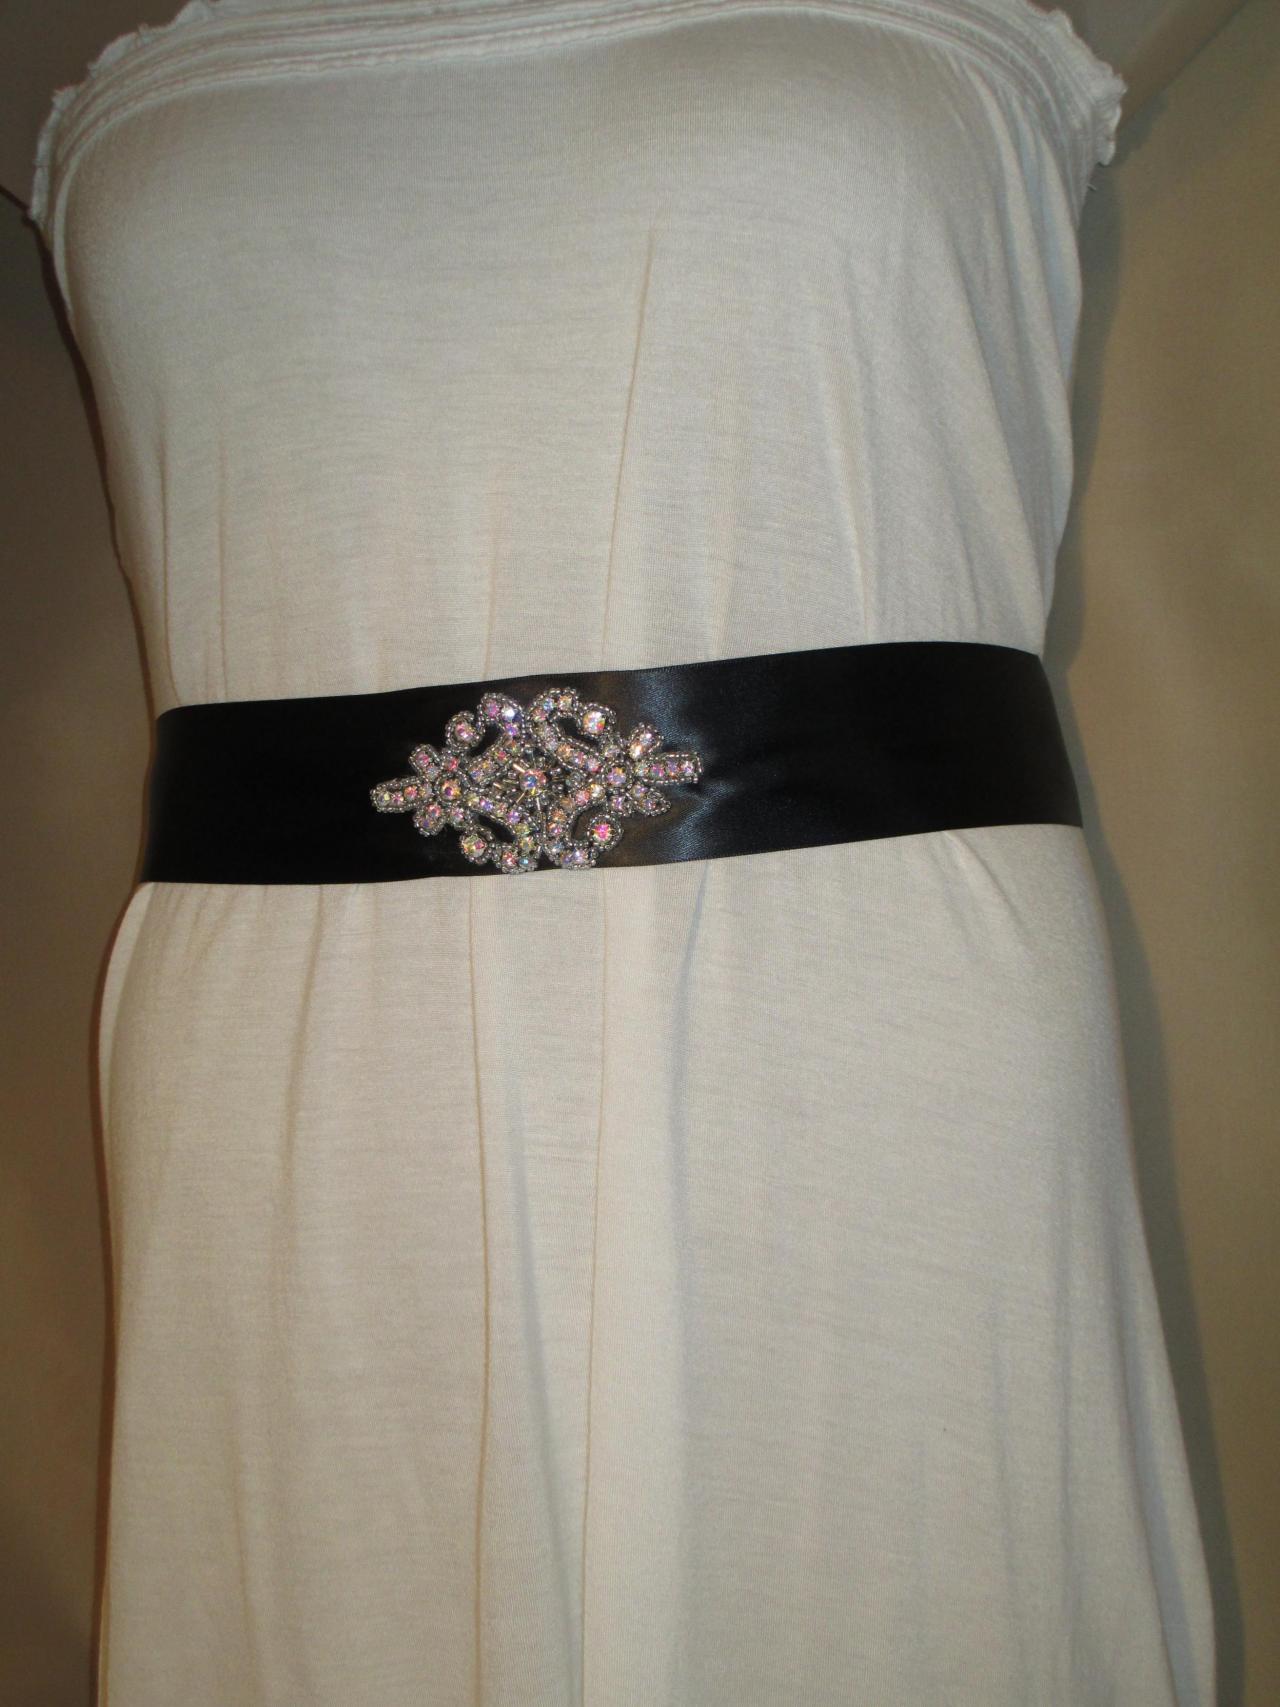 Bridal Sash - Wedding Sash - Black Ribbon - Dress Sash - Rhinestone Applique Embellishment - Handmade In Colorado